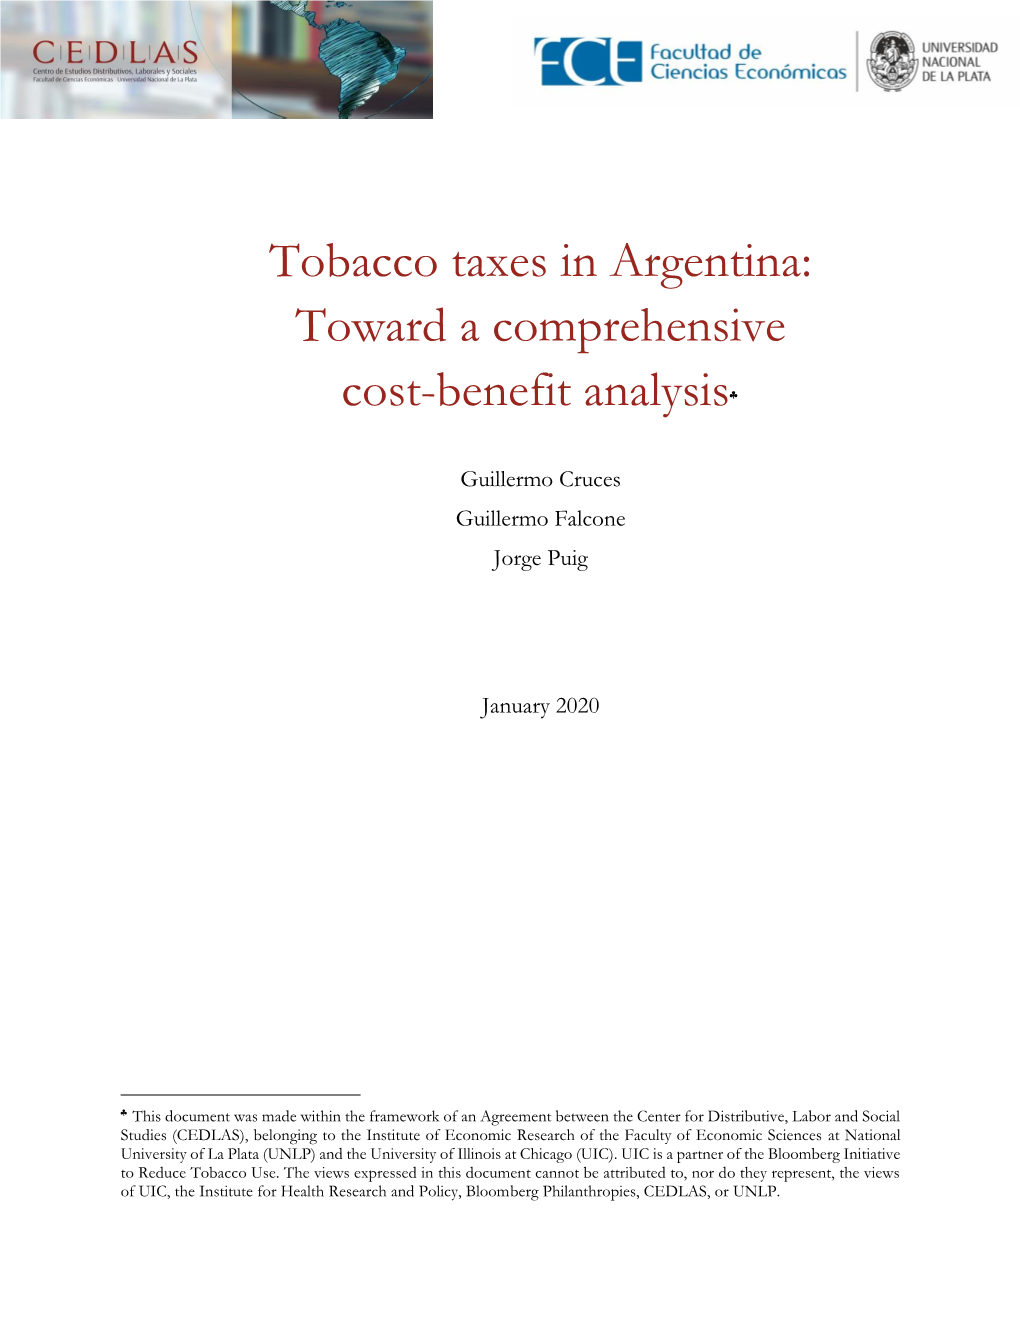 Tobacco Taxes in Argentina: Toward a Comprehensive